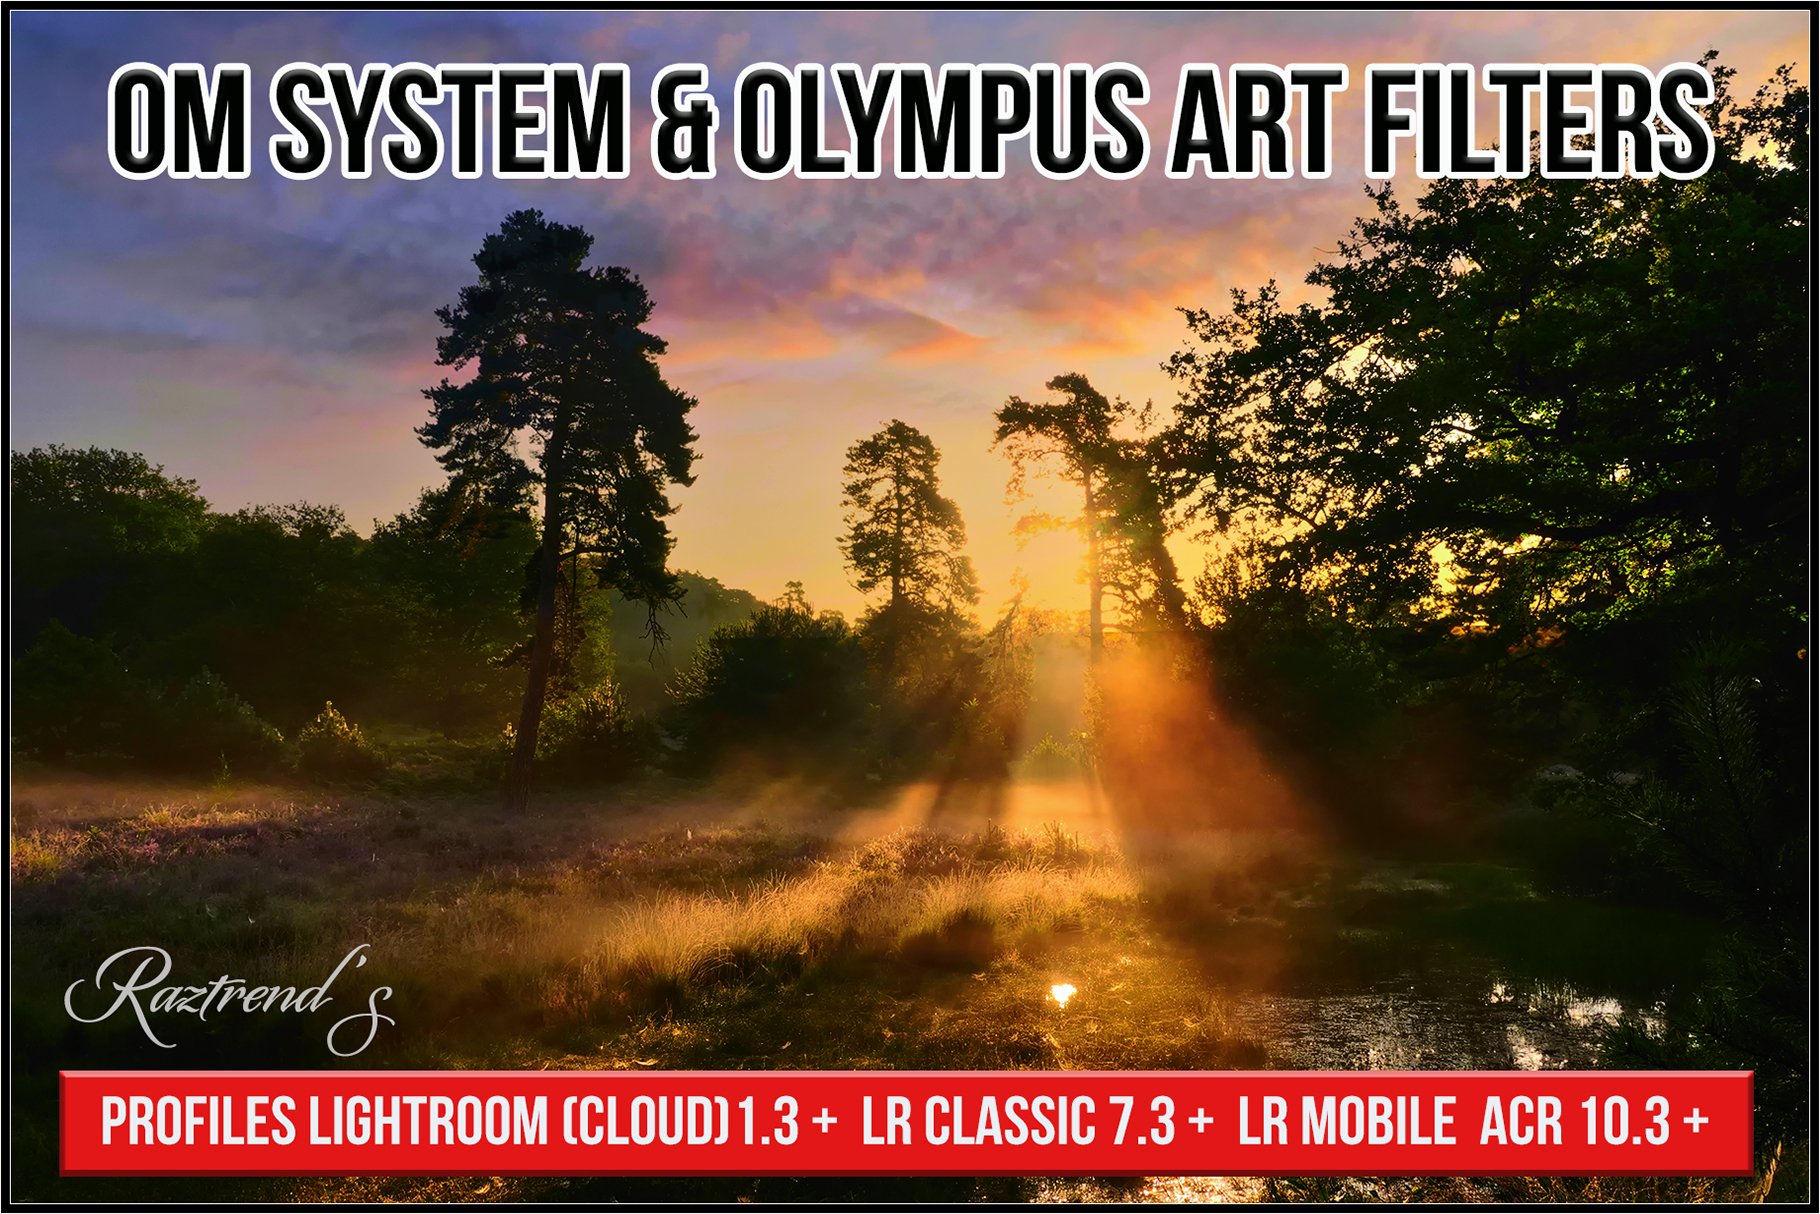 OM System & Olympus Art Filterscover image.